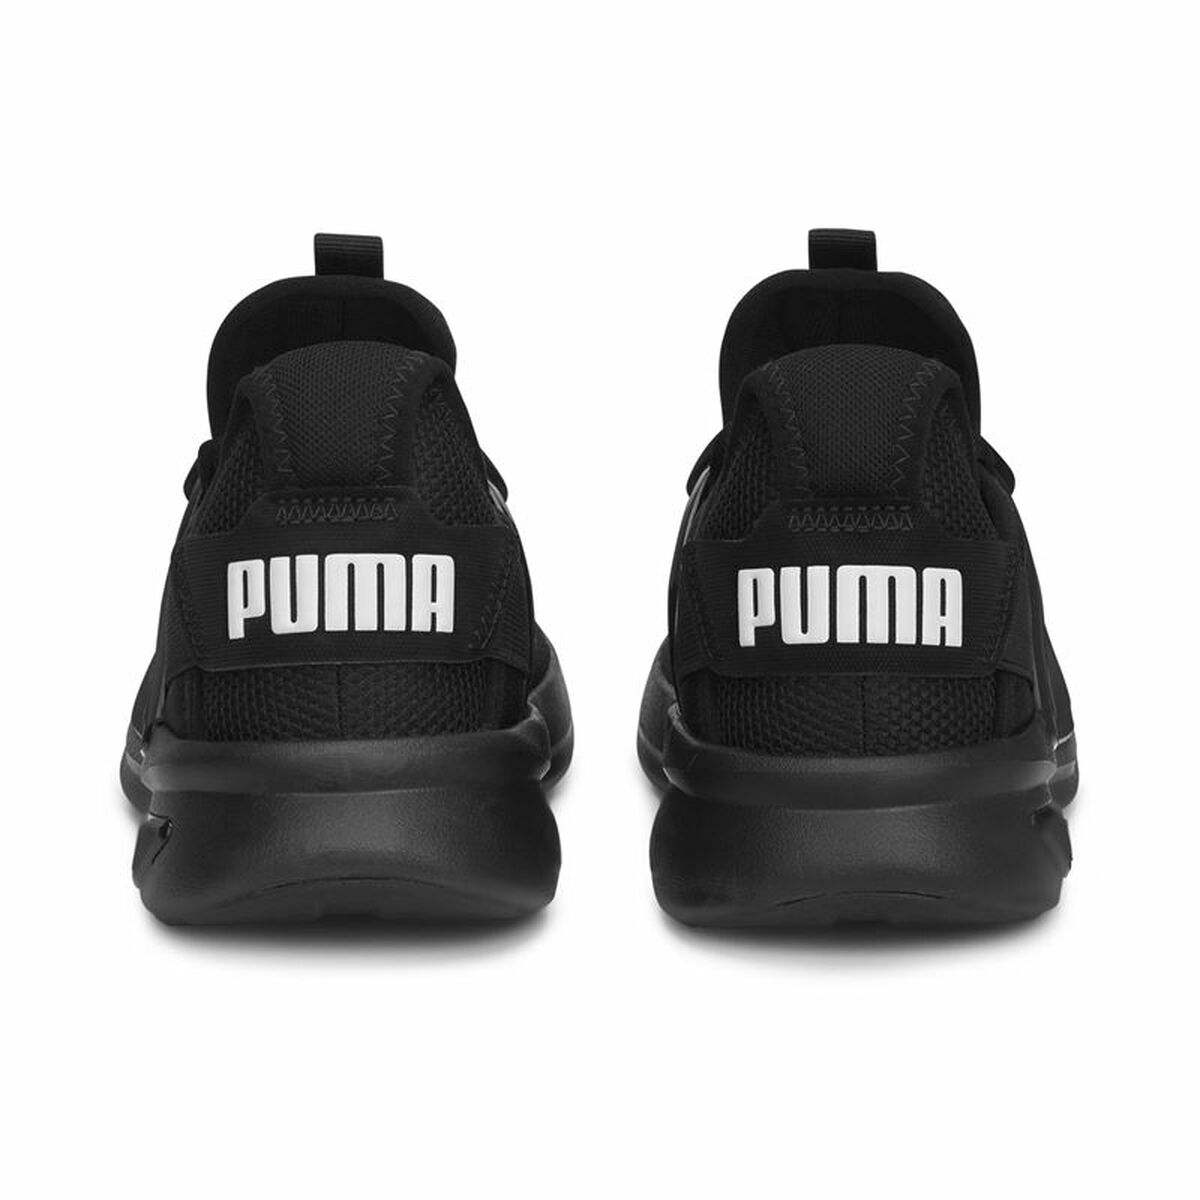 Chaussures de Running pour Adultes Puma Softride Enzo Evo Better Noir Homme - Puma - Jardin D'Eyden - jardindeyden.fr